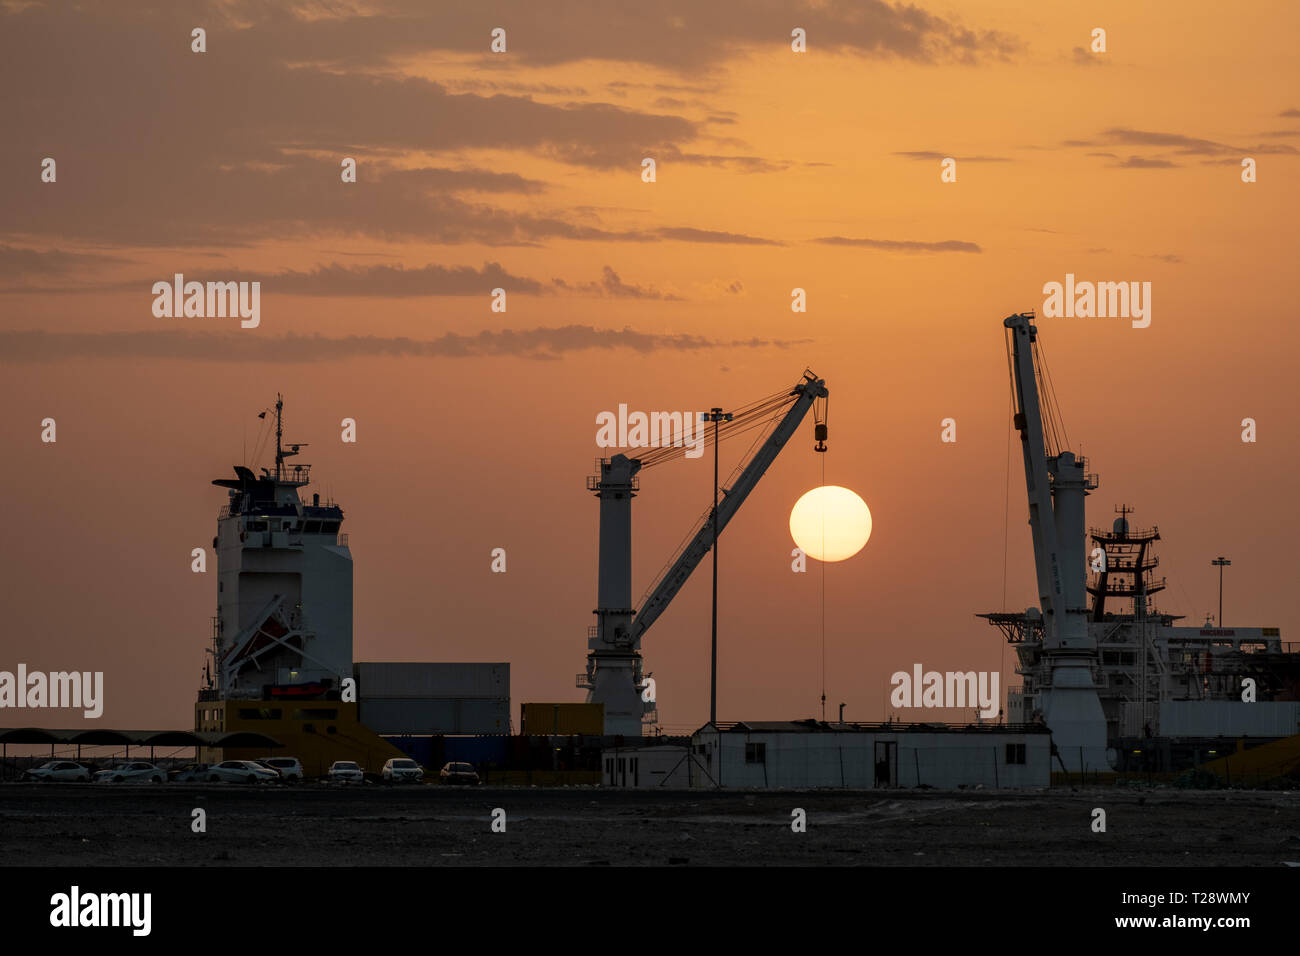 Lifting Crane mounted on Cargo ship during sunset Stock Photo